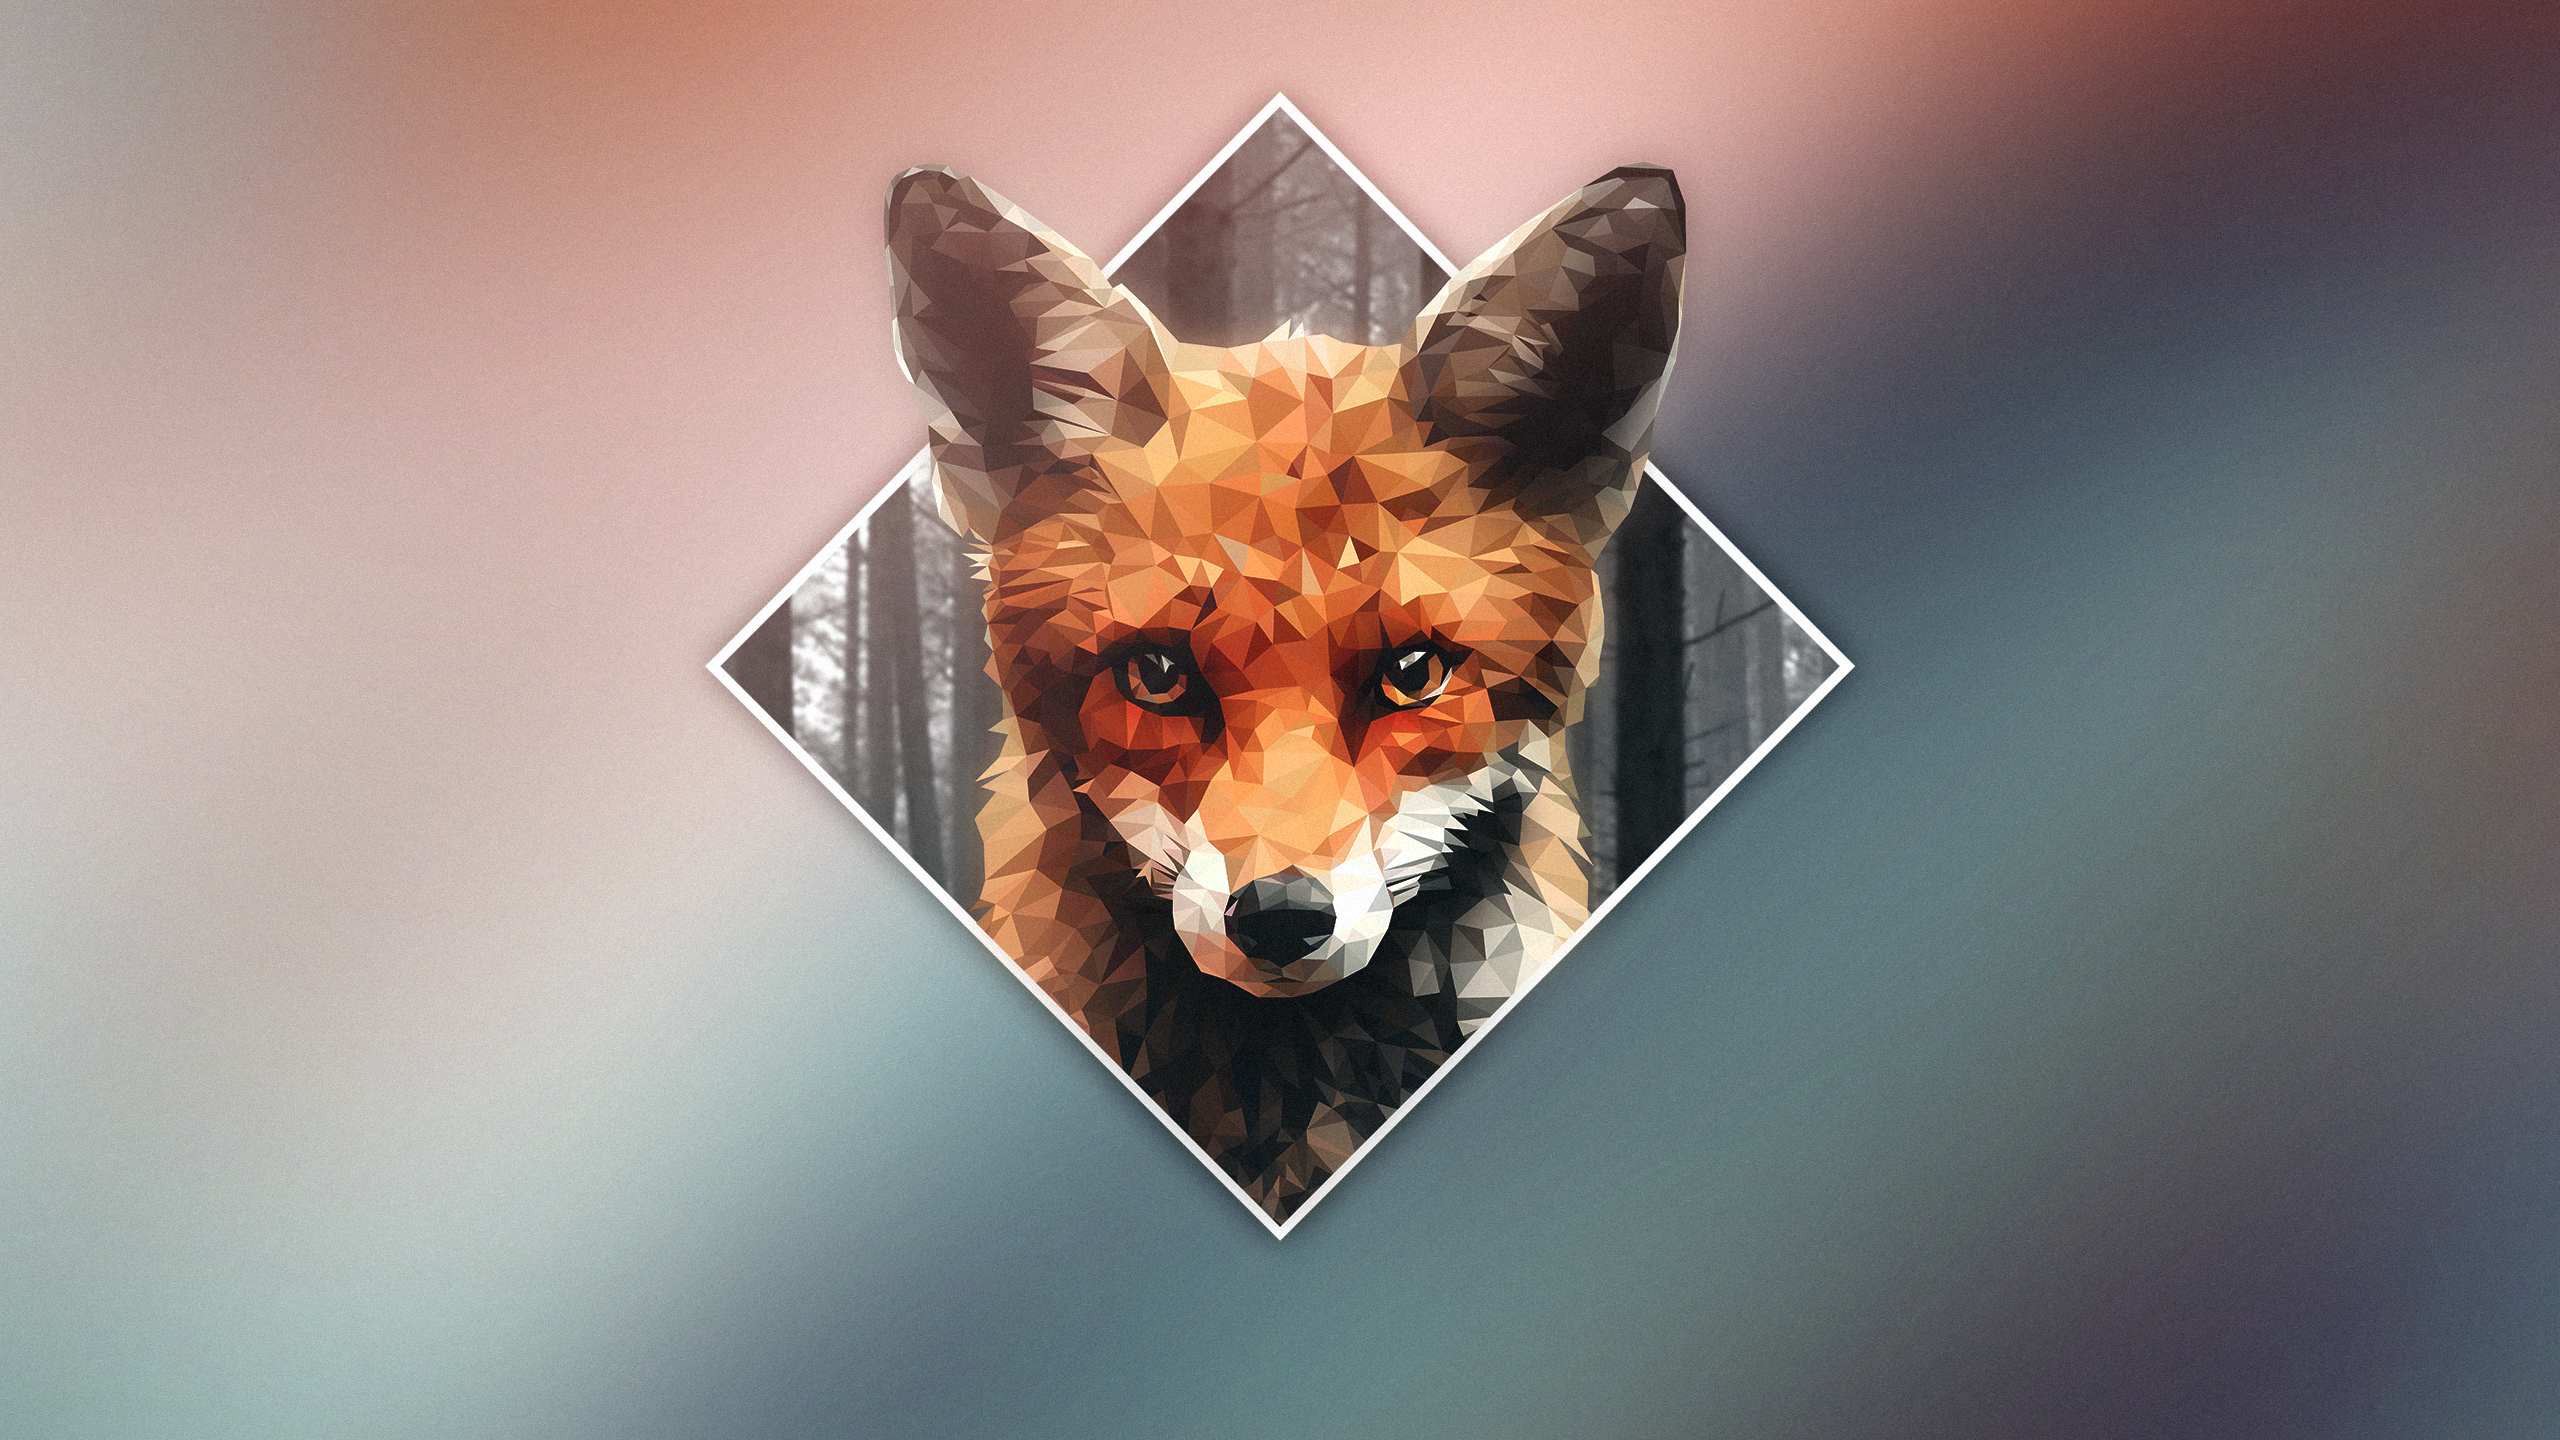 General 2560x1440 digital art low poly polygon art animals gradient simple background minimalism fox